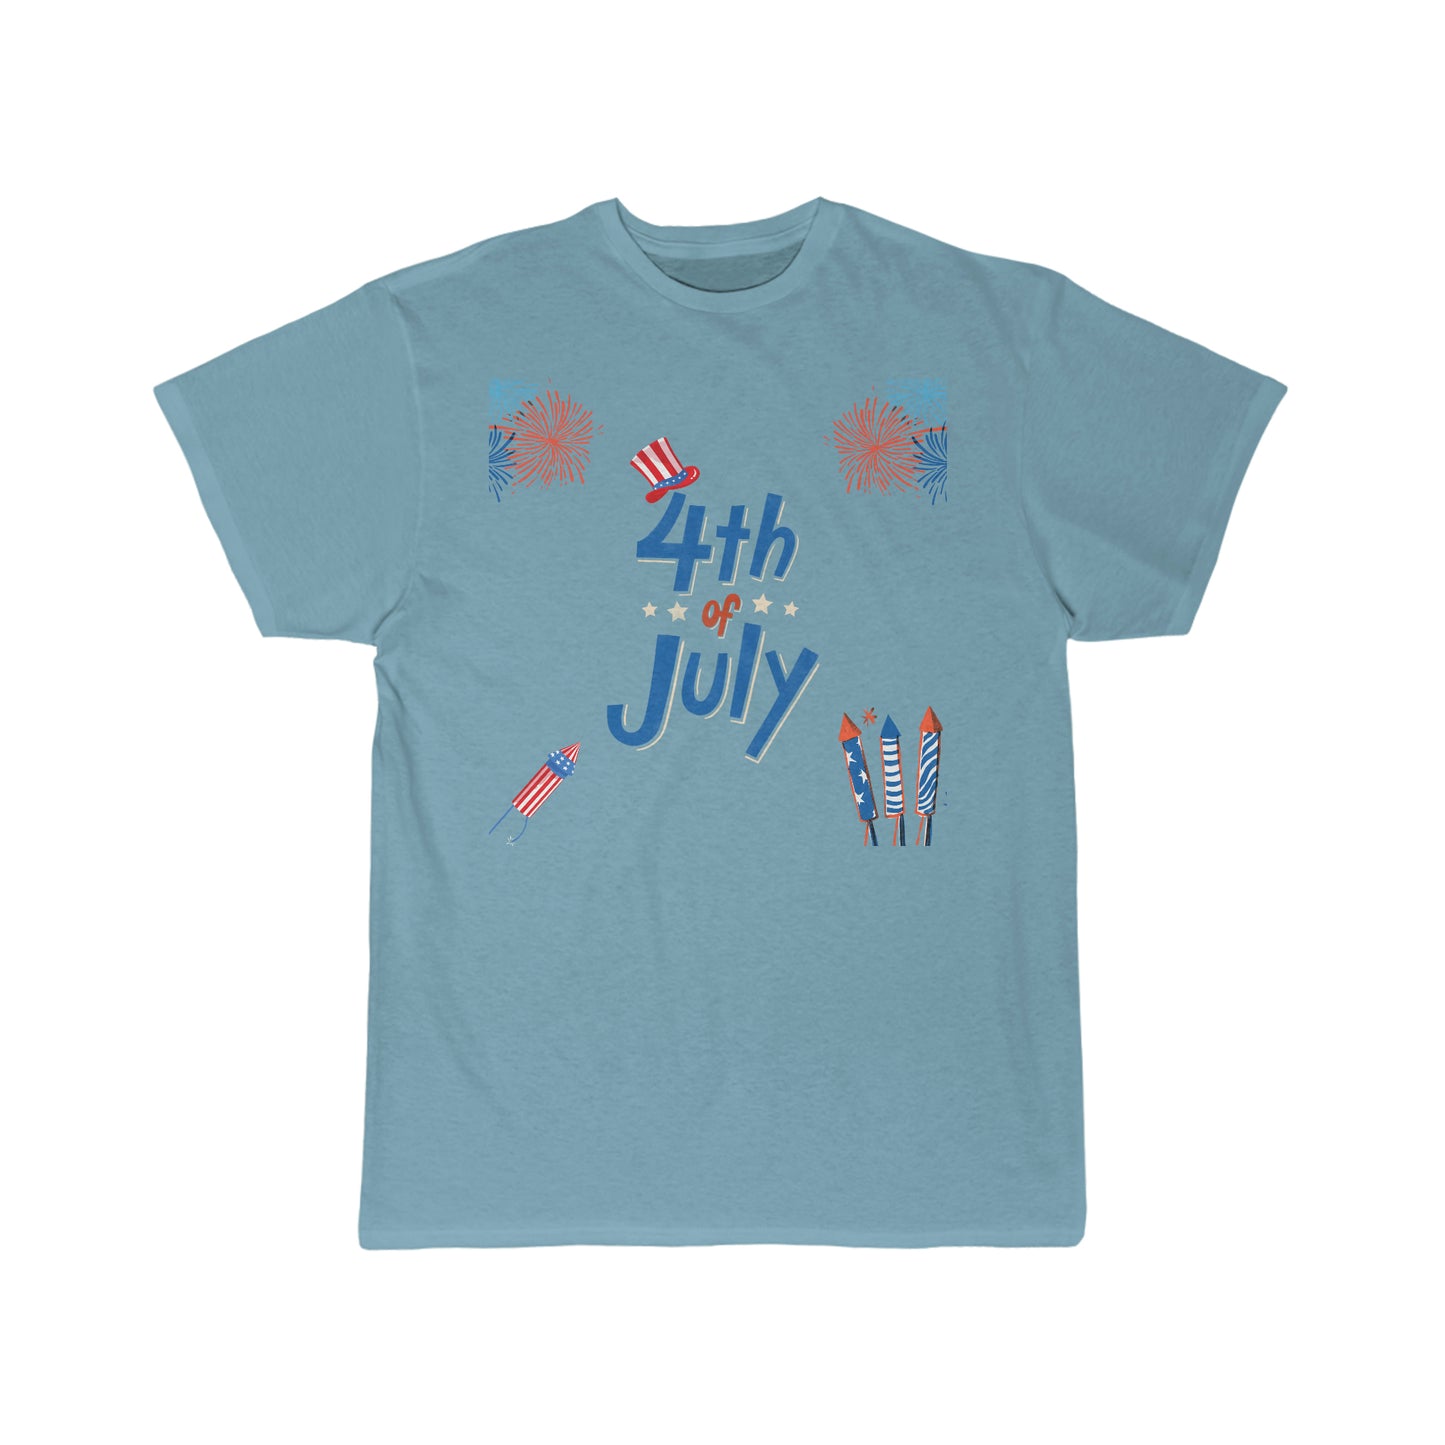 July 4th, USA Flag Shirt, 4th of July Shirt, Big USA T-shirt, USA Comfort Colors Shirt, Comfort Colors USA Flag Tee, USA Comfort Colors Tee, Usa Shirt Men's Short Sleeve Tee